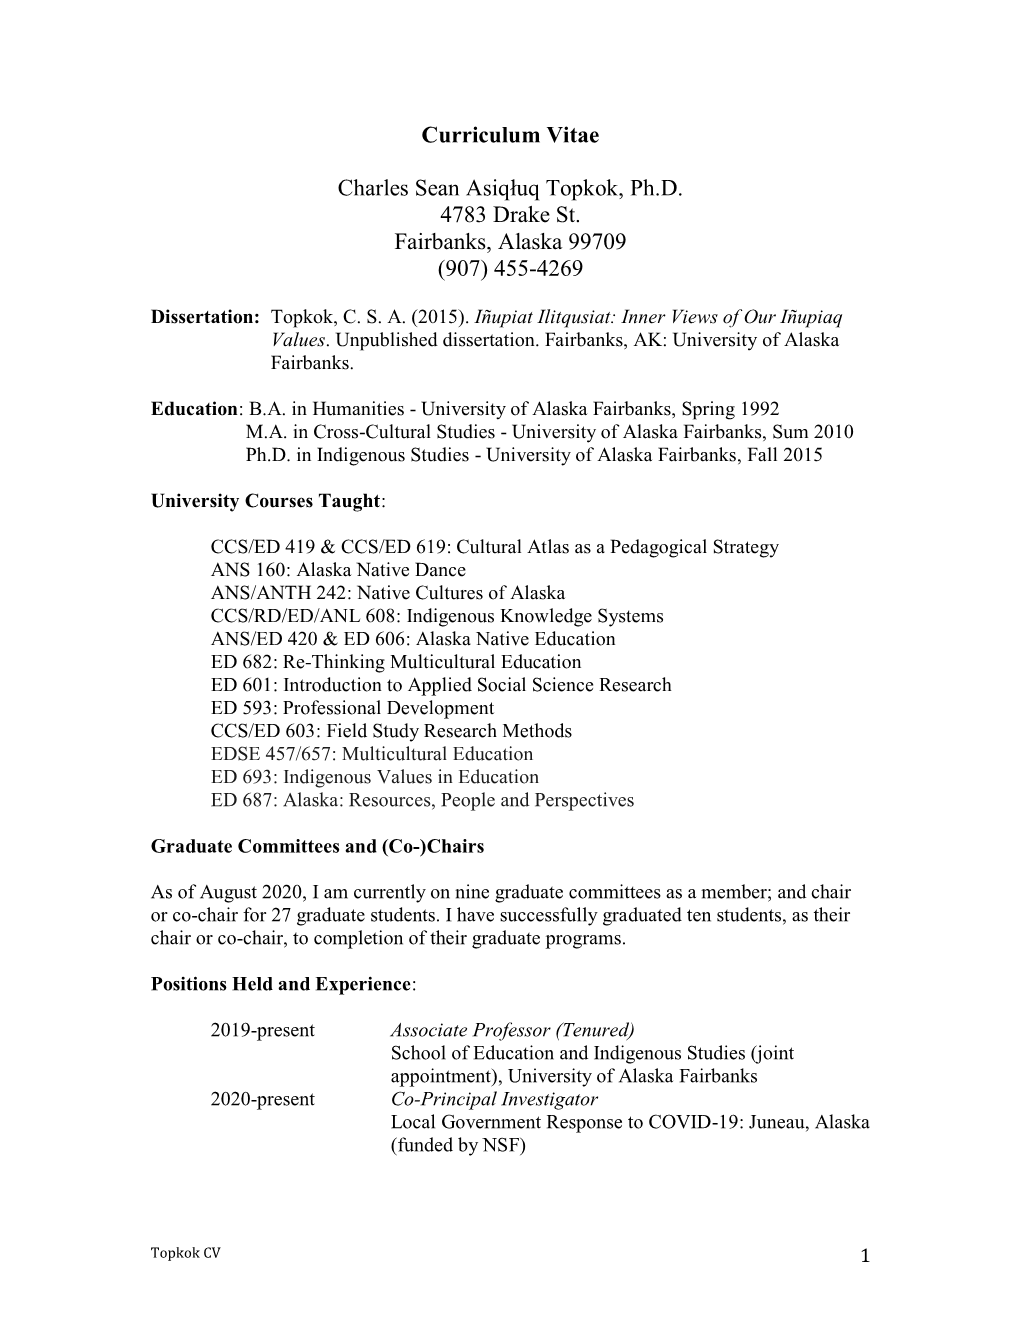 Curriculum Vitae Charles Sean Asiqłuq Topkok, Ph.D. 4783 Drake